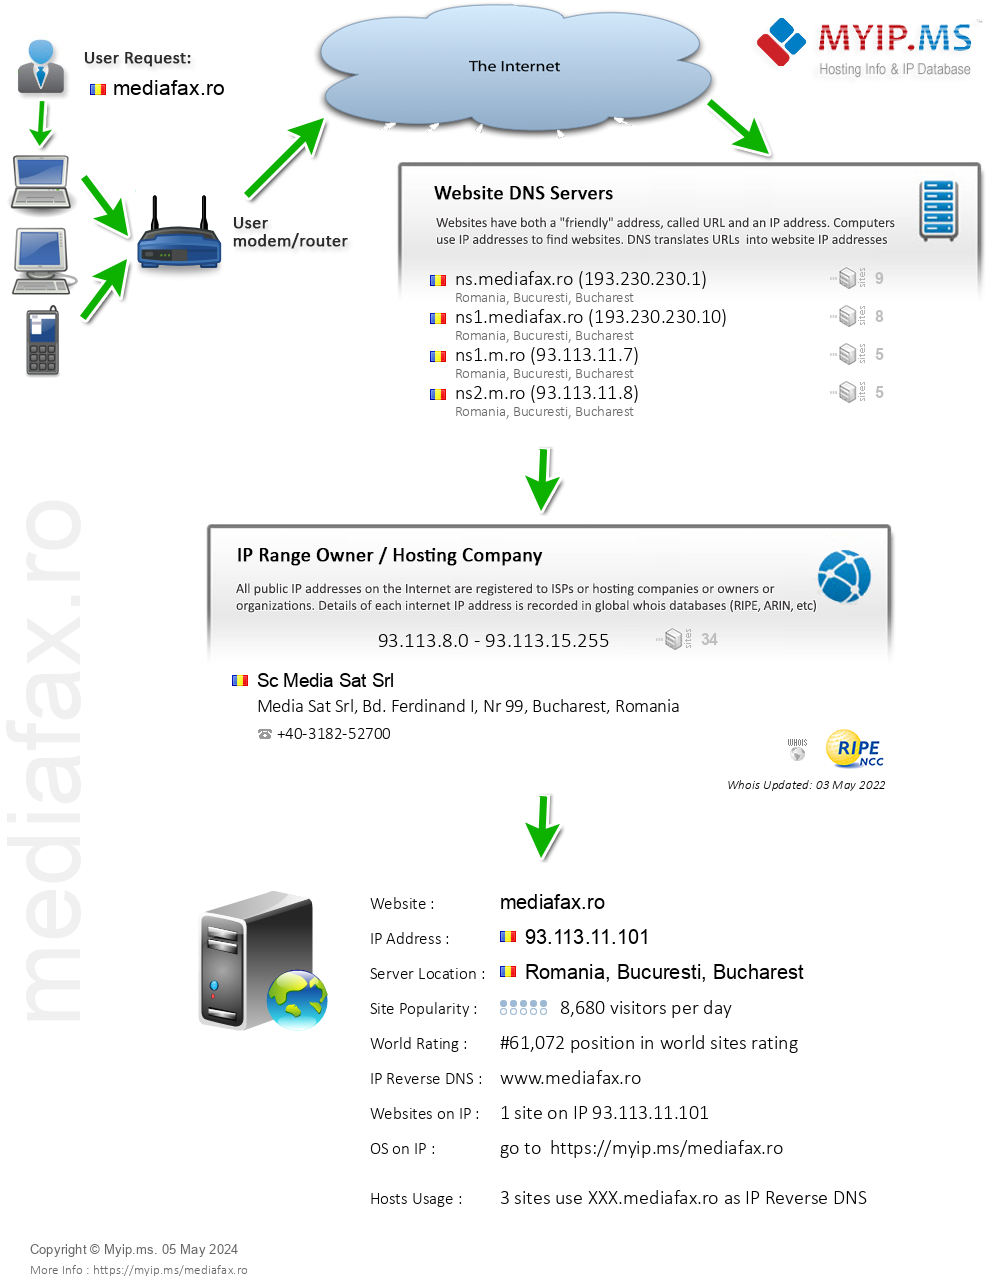 Mediafax.ro - Website Hosting Visual IP Diagram